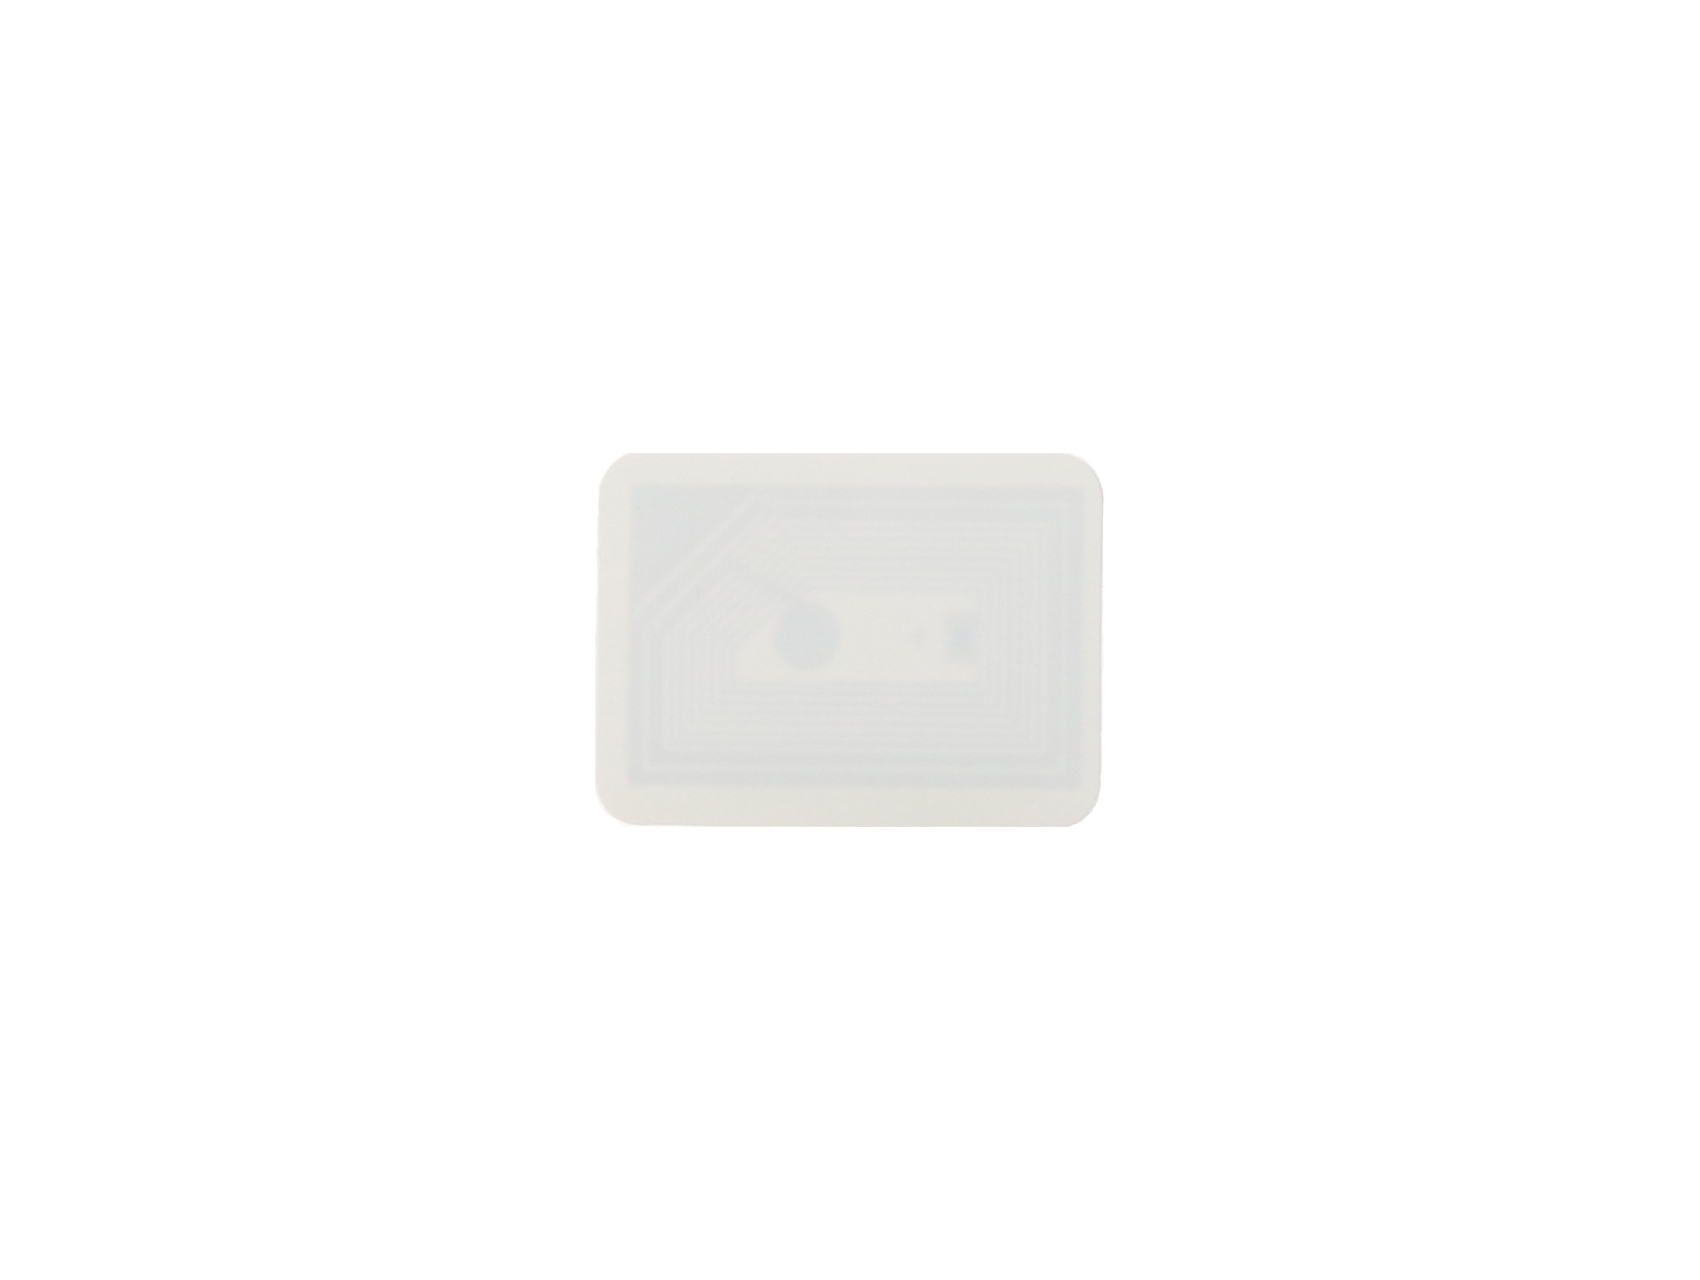 NFC Sticker PET - 20 x 15 mm - NTAG213 - 180 Byte - white